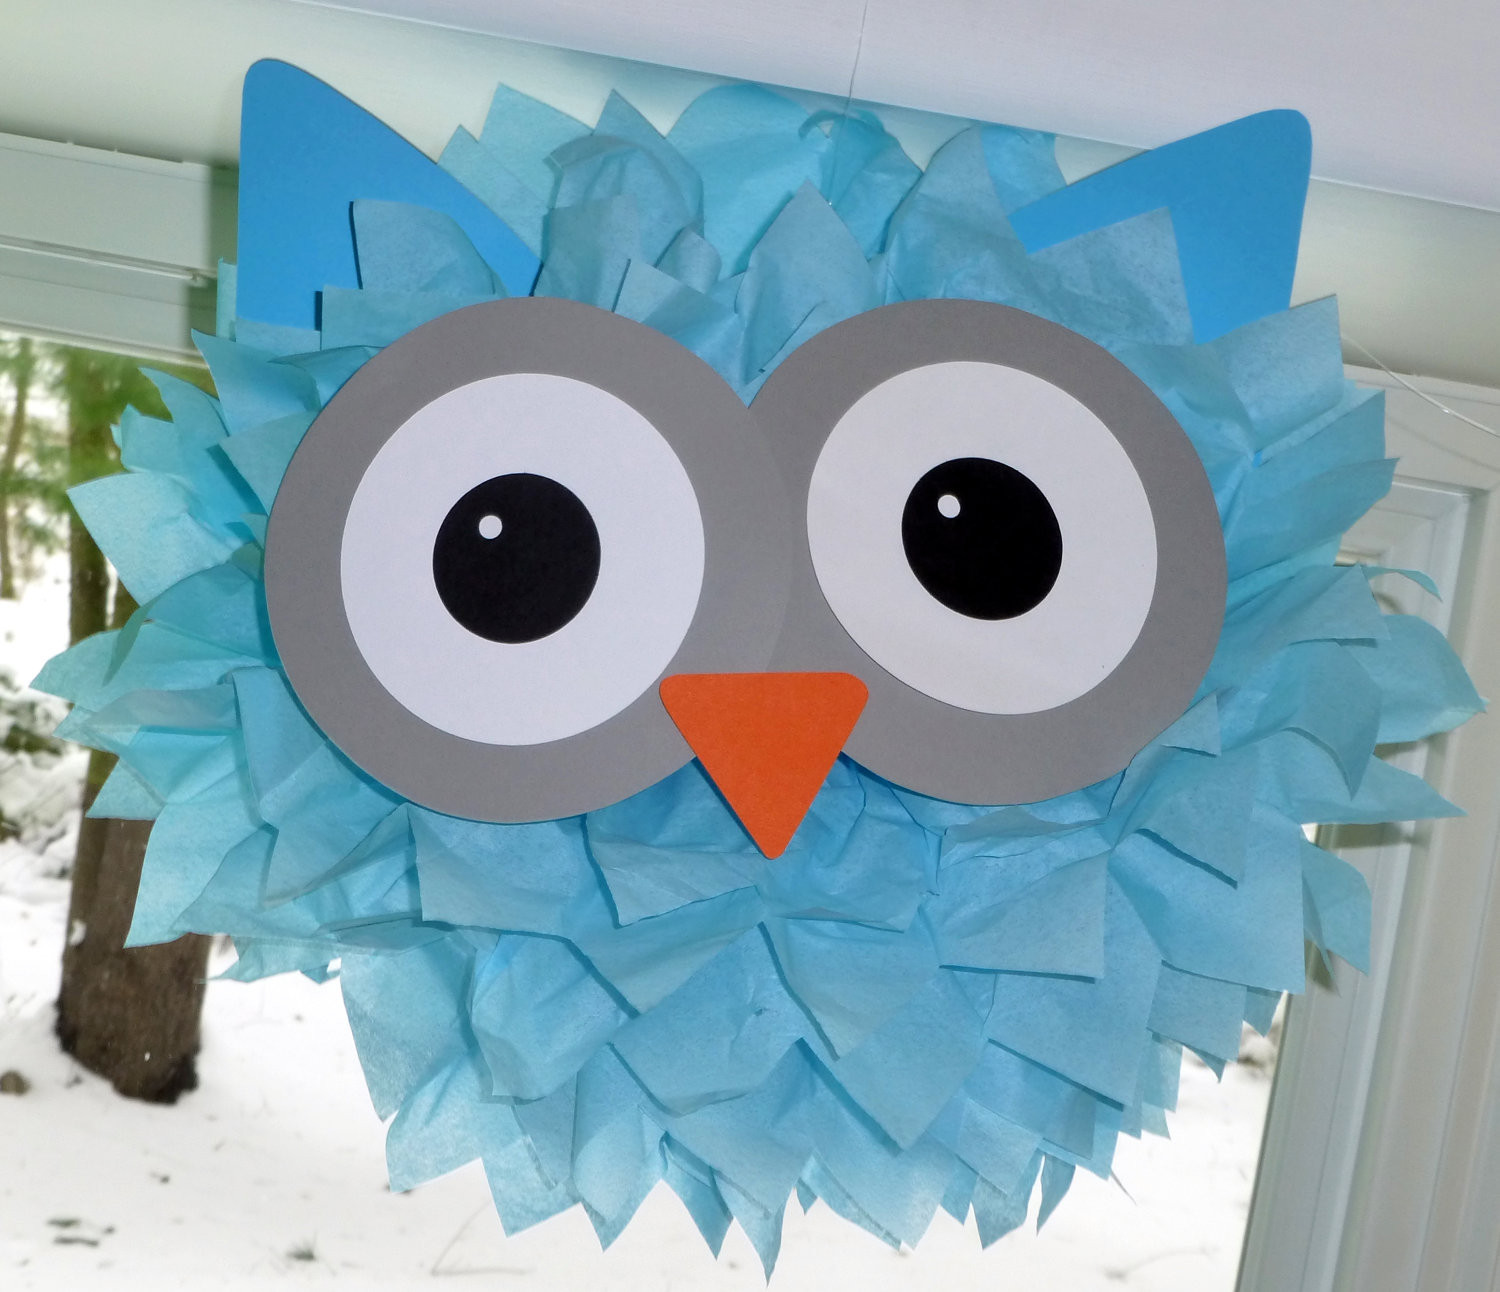 Owl Baby Shower Decor
 Owl Baby Shower Ideas Baby Ideas